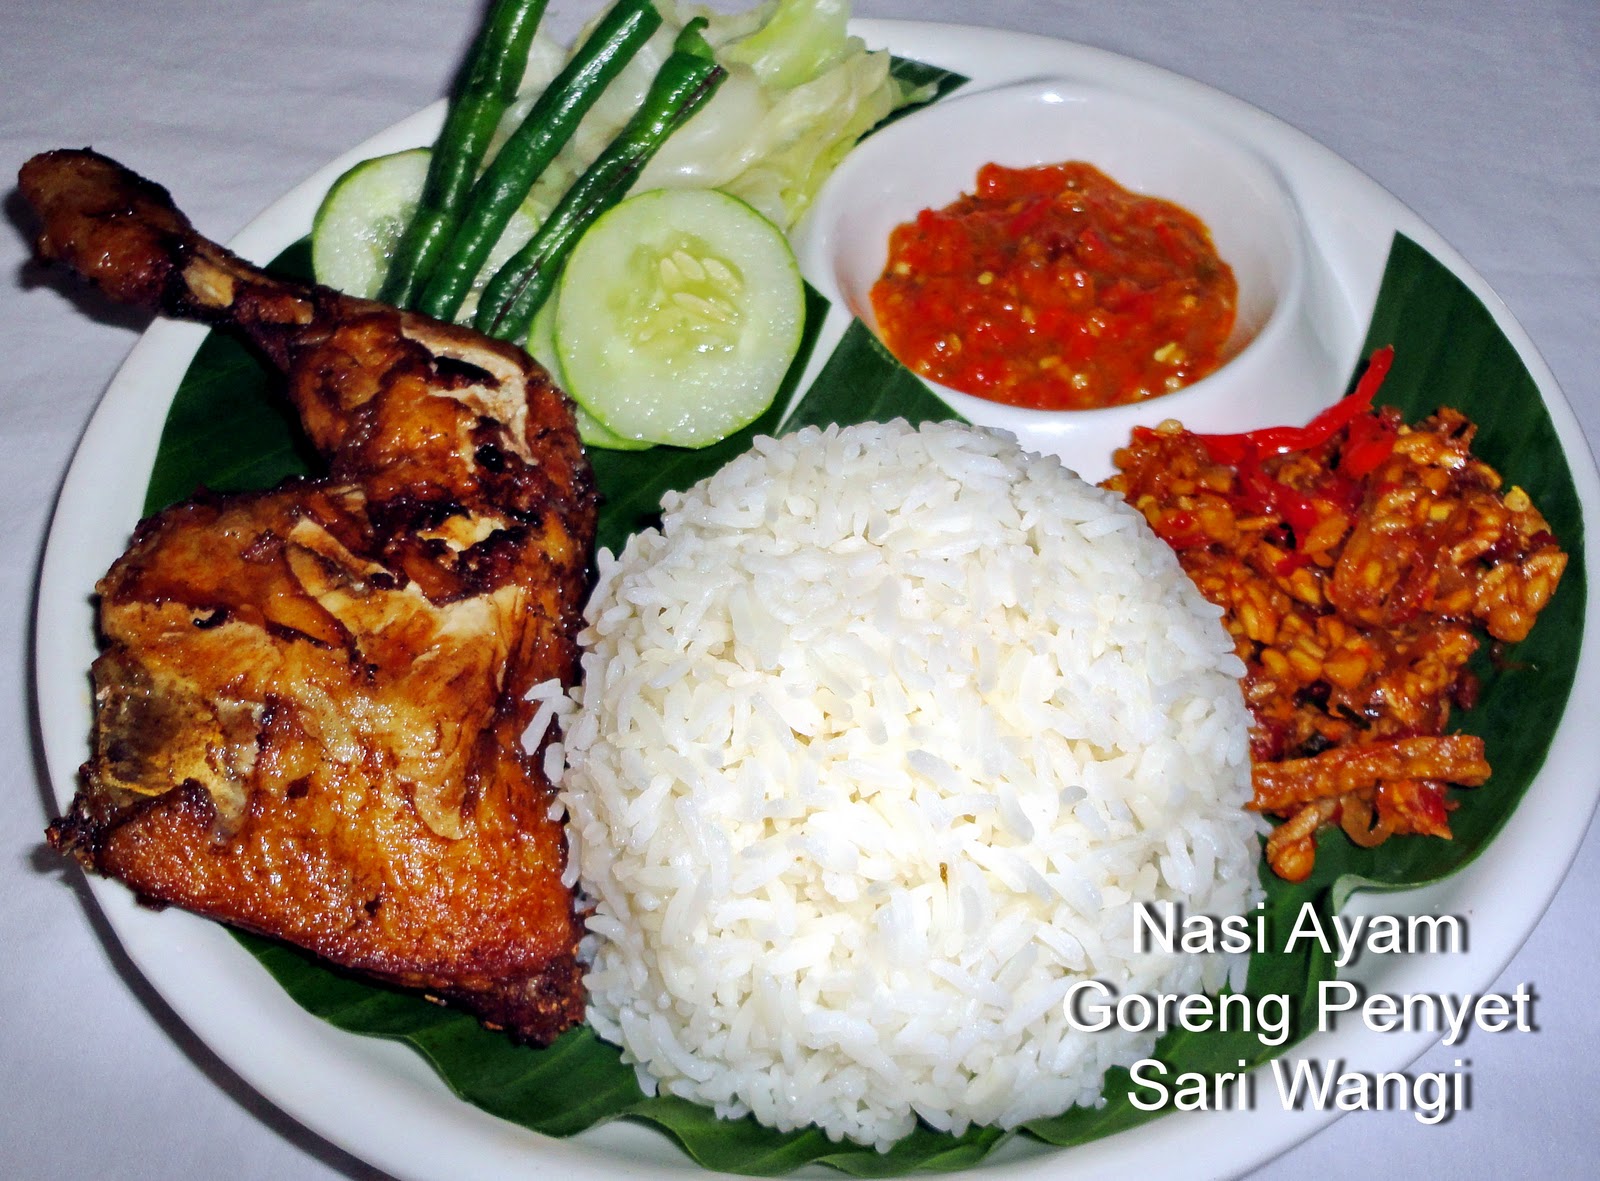 Pondok Sari Wangi Indonesian Restaurant: All New Food Menu